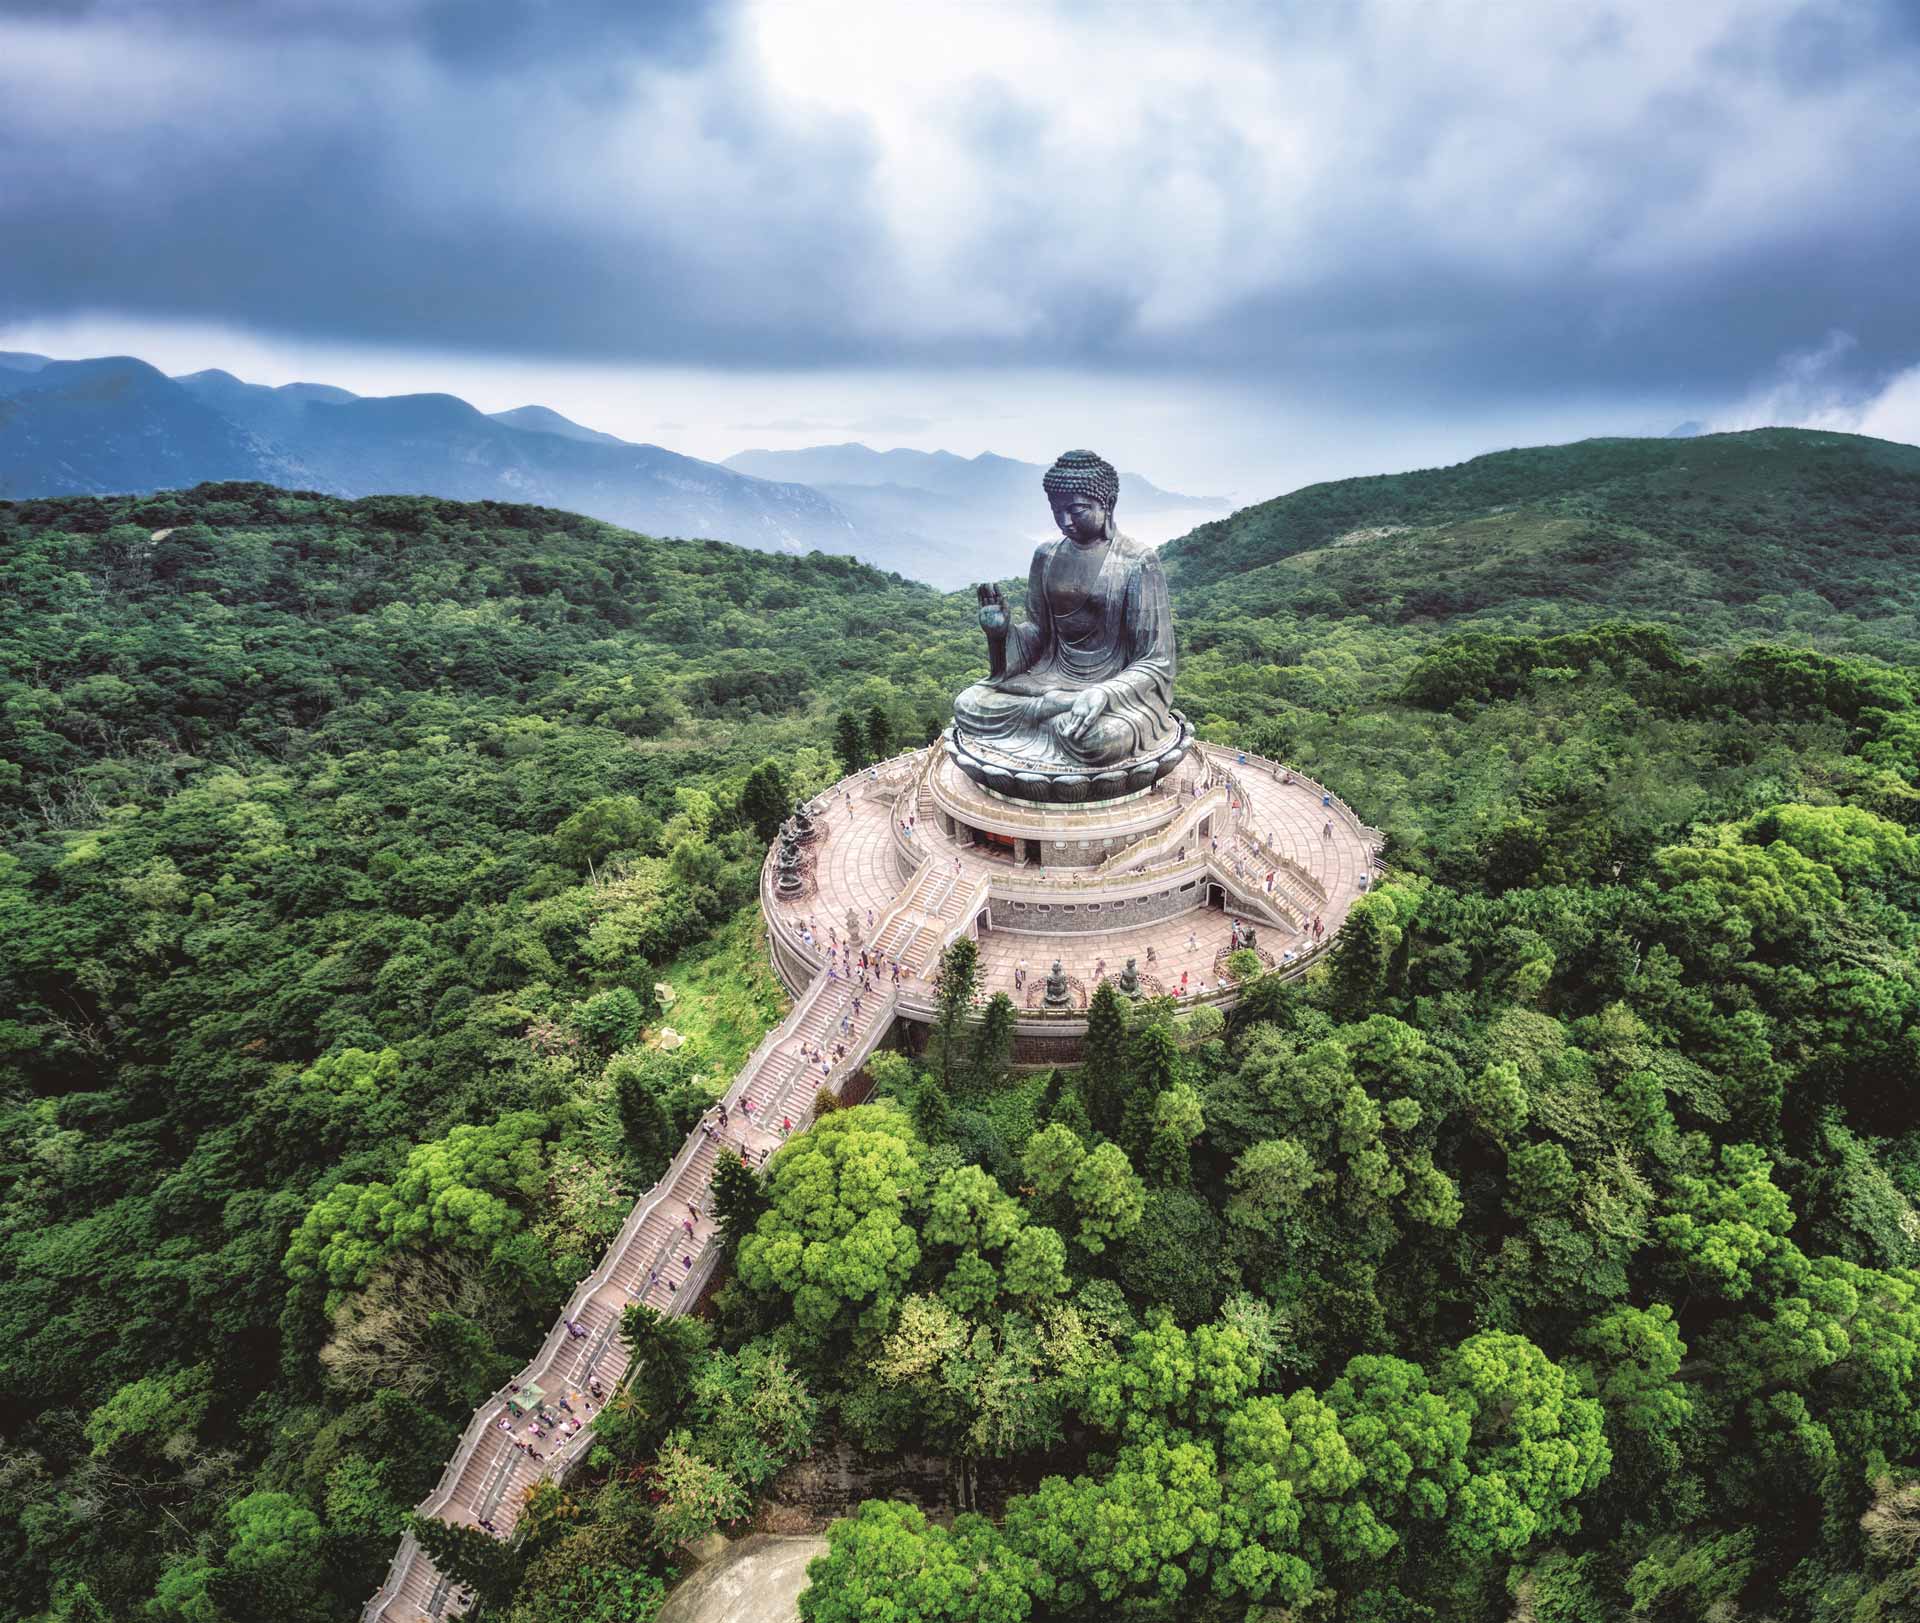 Giant Buddha/Po Lin Monastery in Hong Kong, Lantau Island